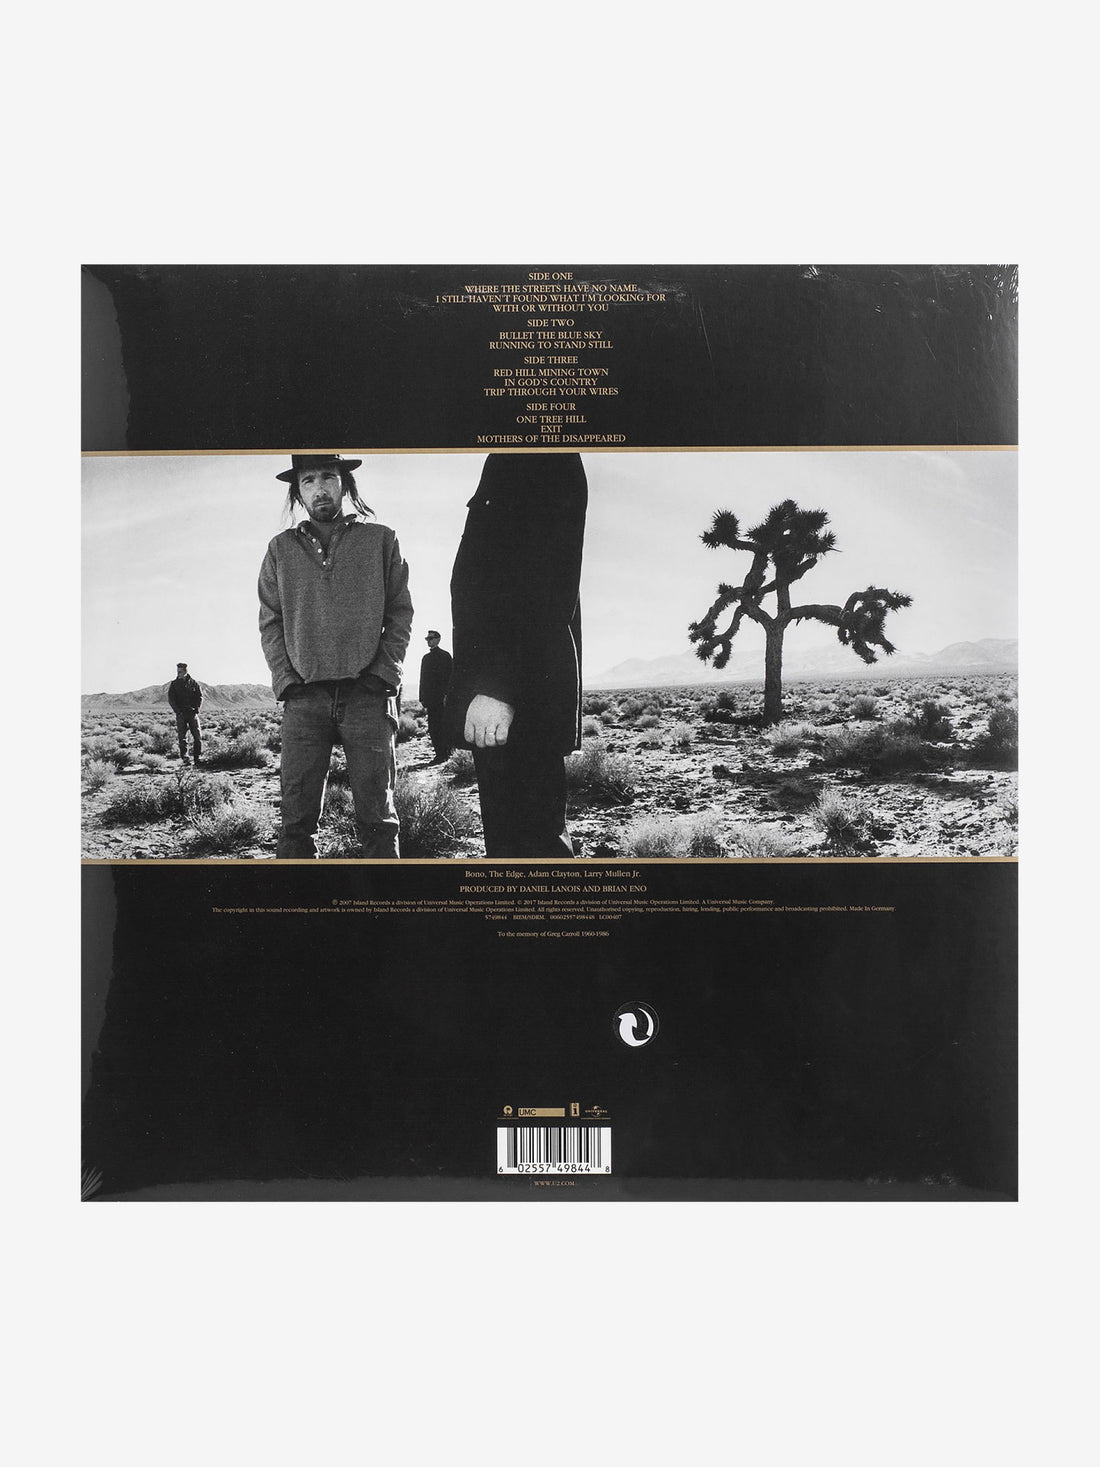 U2 - The Joshua Tree - 2LP - Heavyweight Vinyl